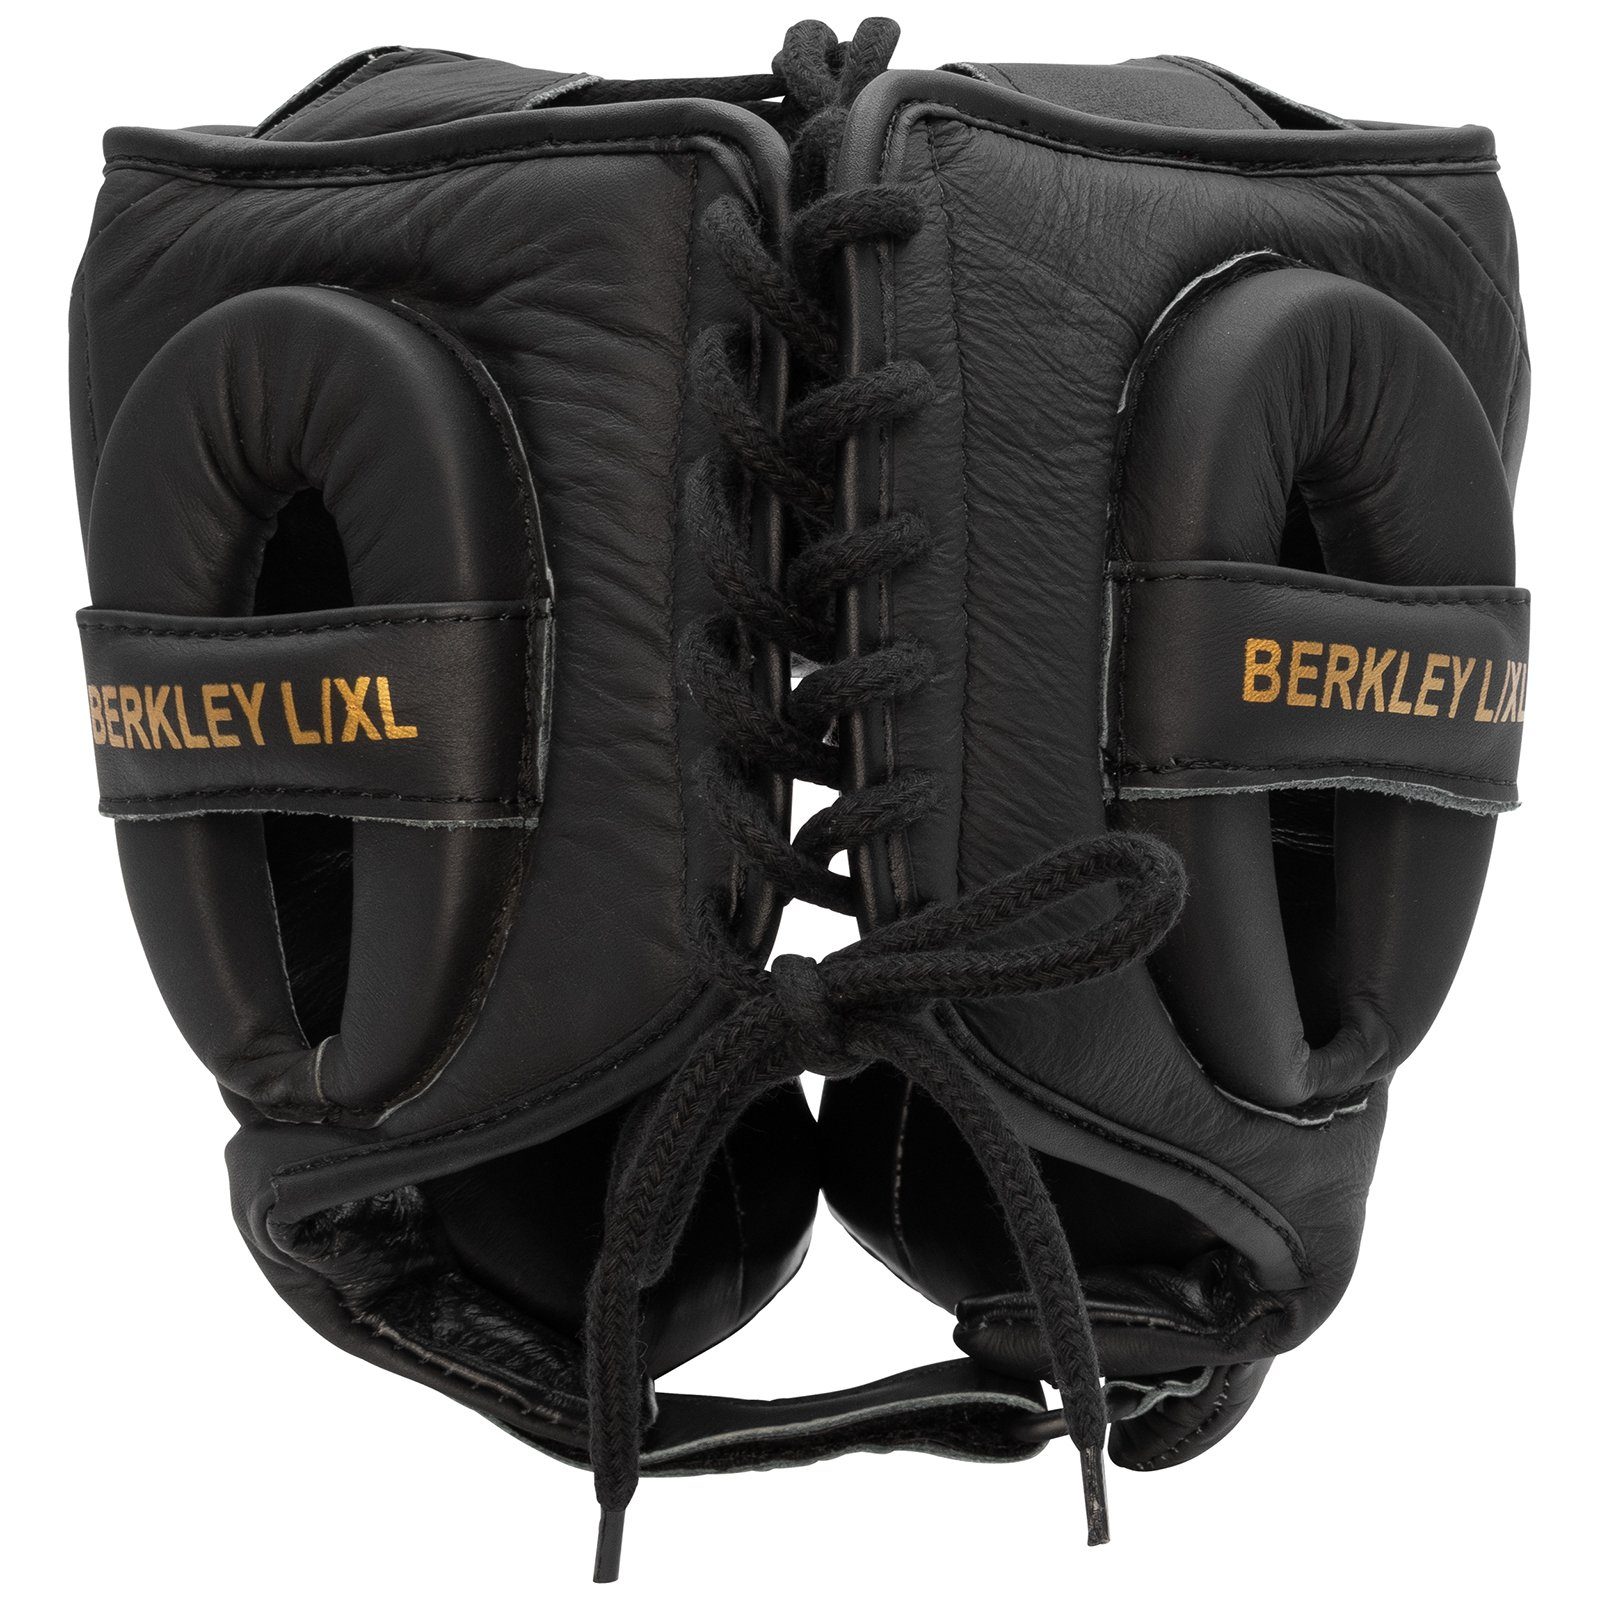 Sport Kampfsportausrüstung Benlee Rocky Marciano Boxhandschuhe BERKLEY